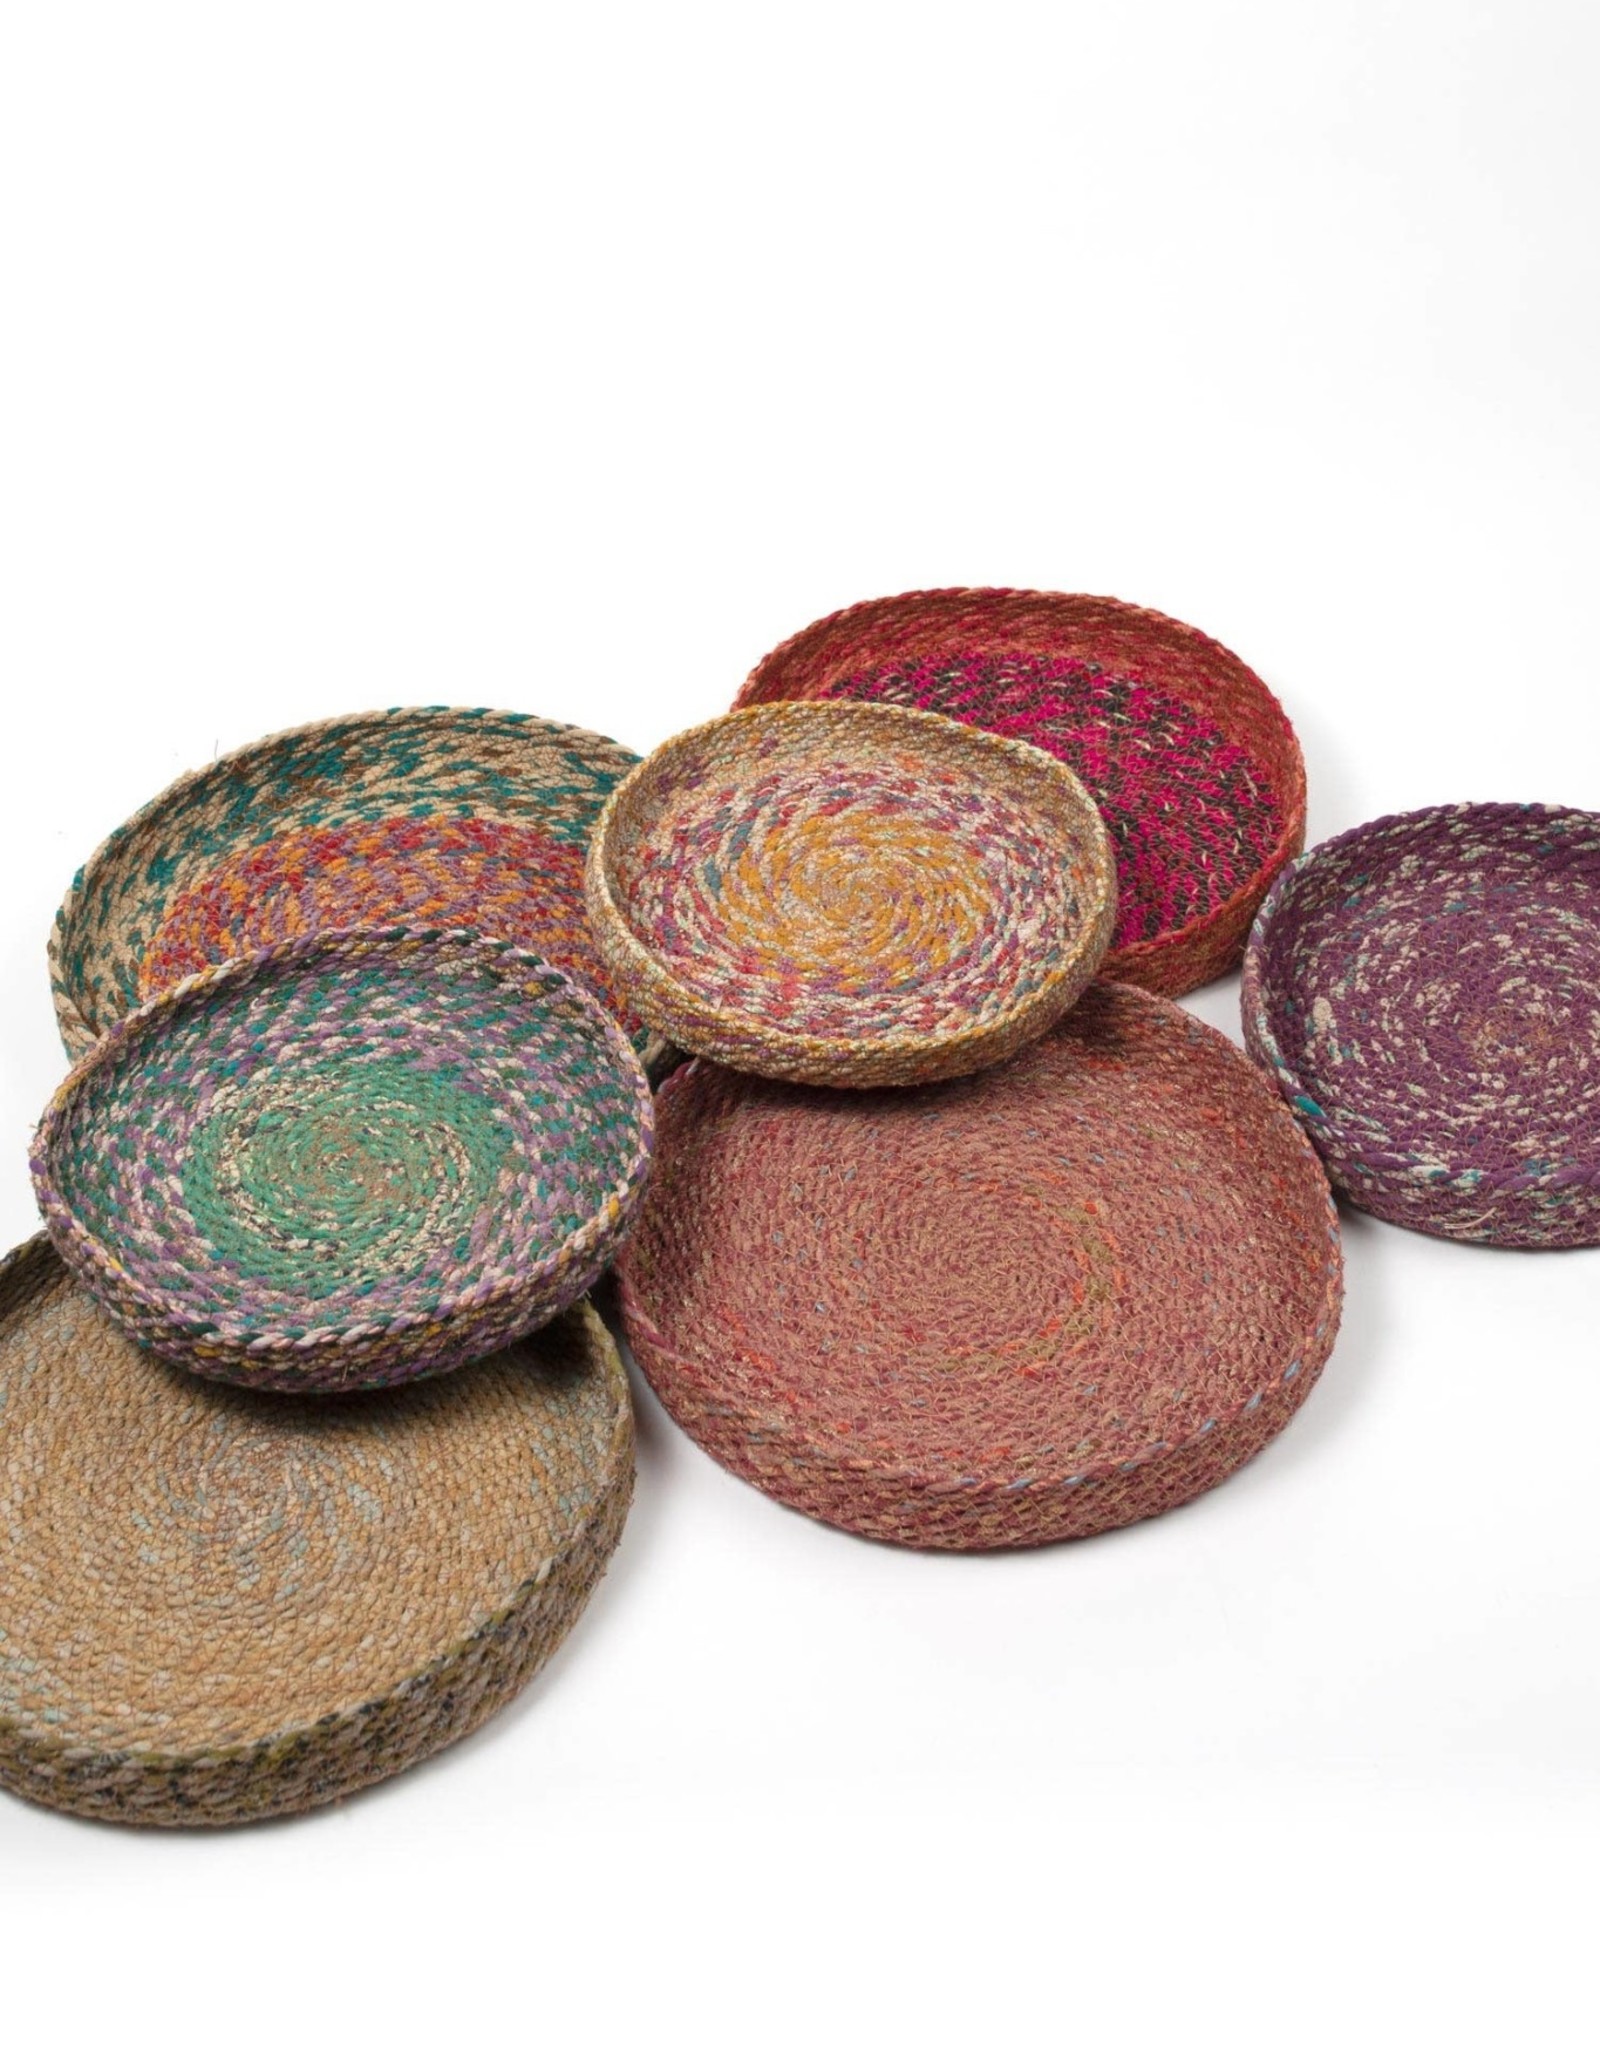 Ten Thousand Villages Stitched Sari Fabric Tray - 12"